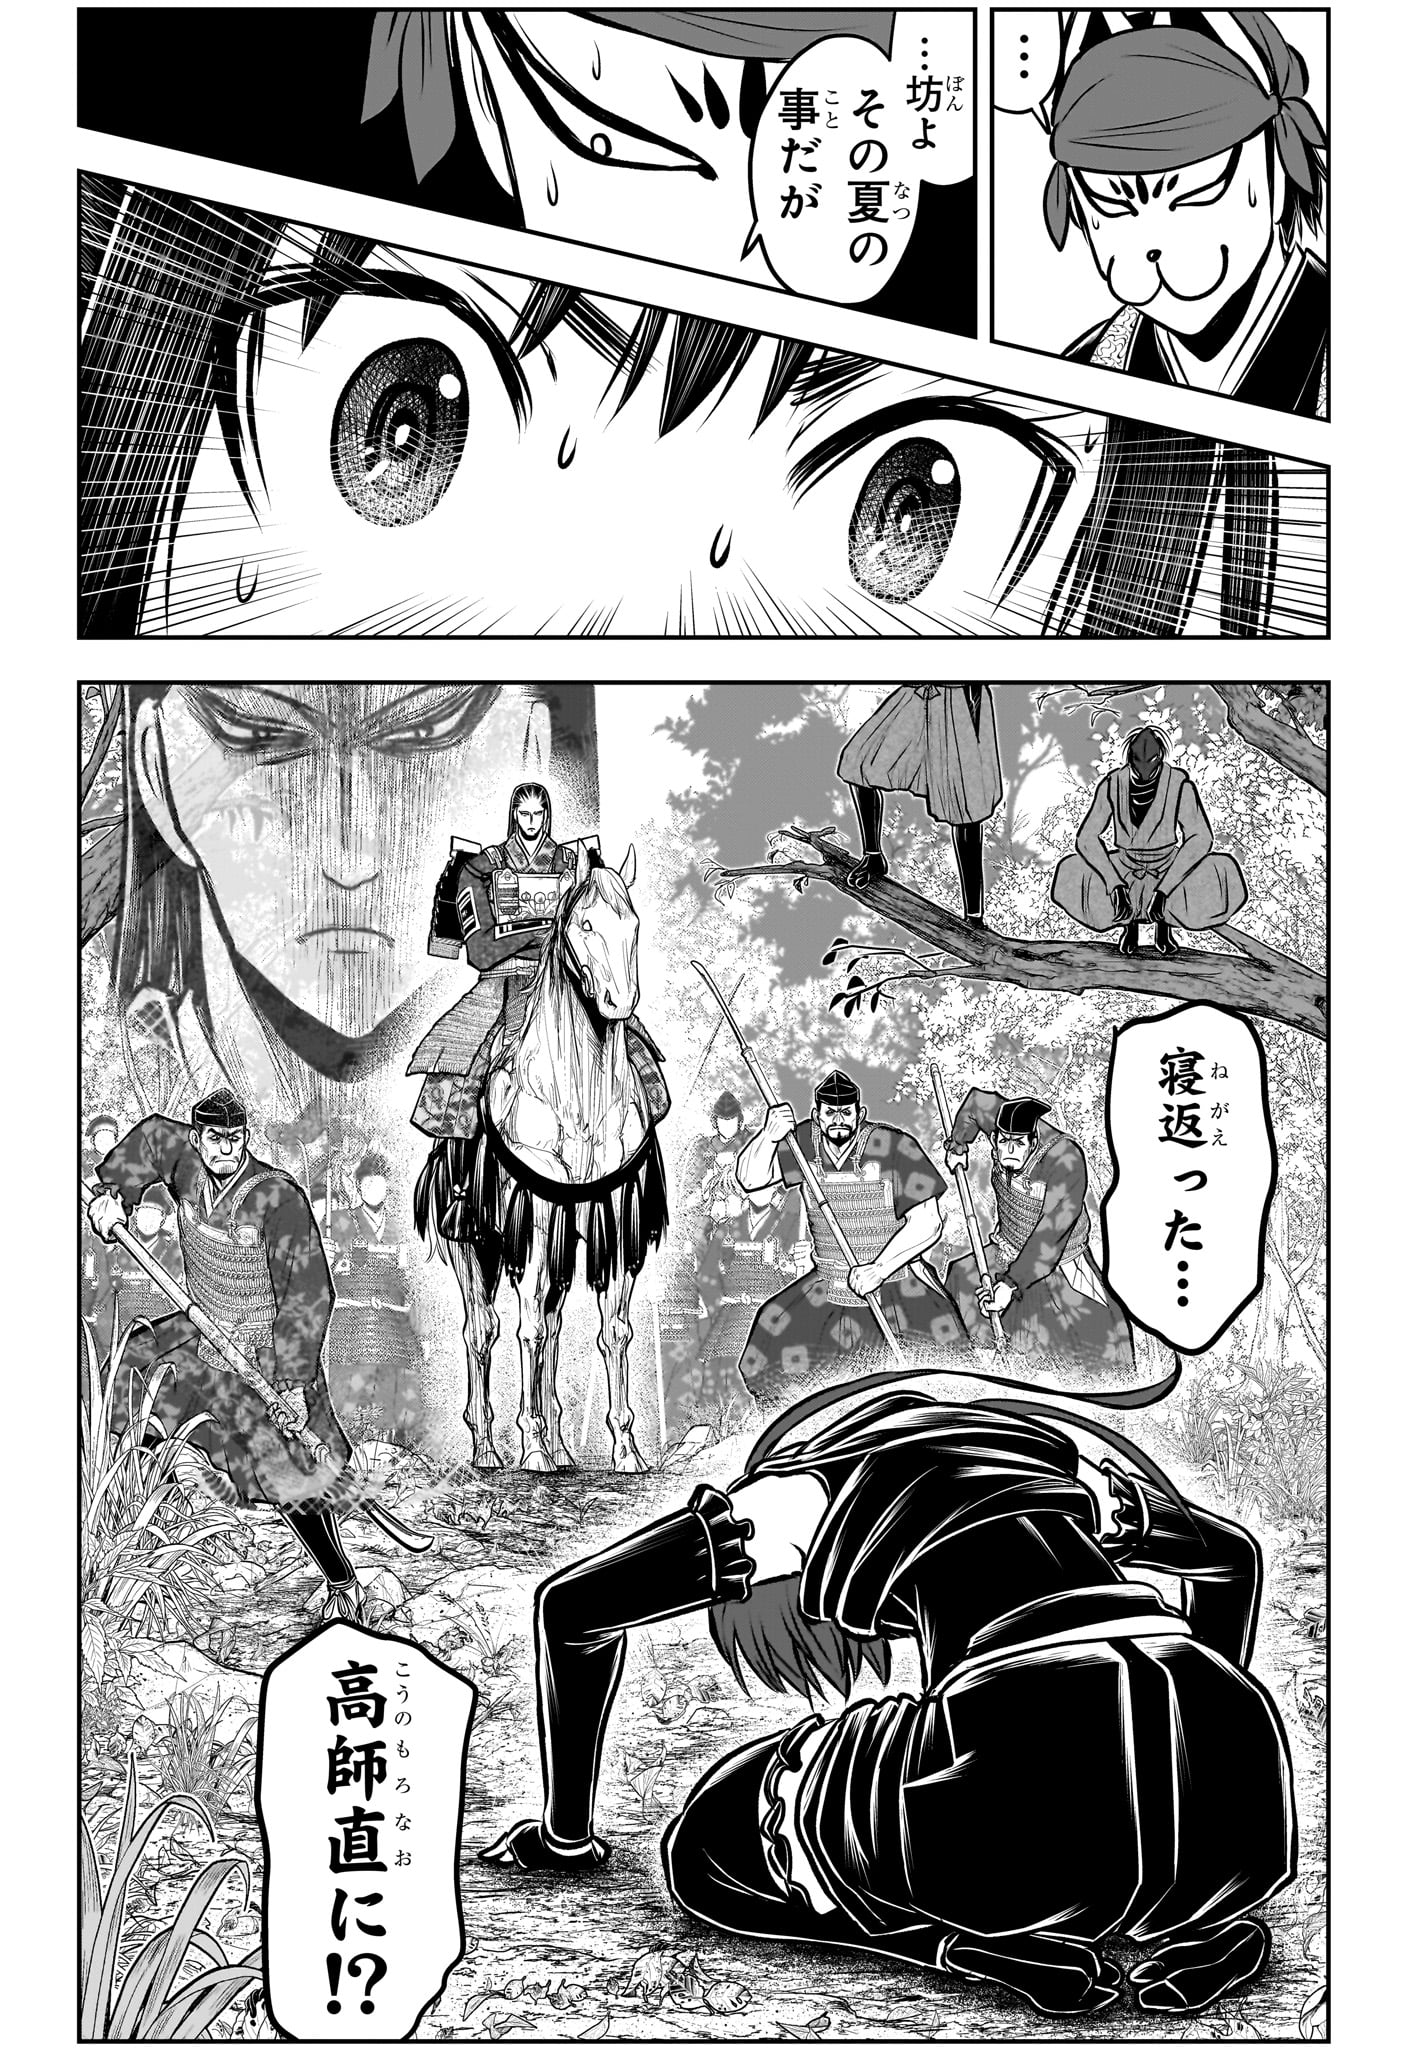 Nige Jouzu no Wakagimi - Chapter 148 - Page 18